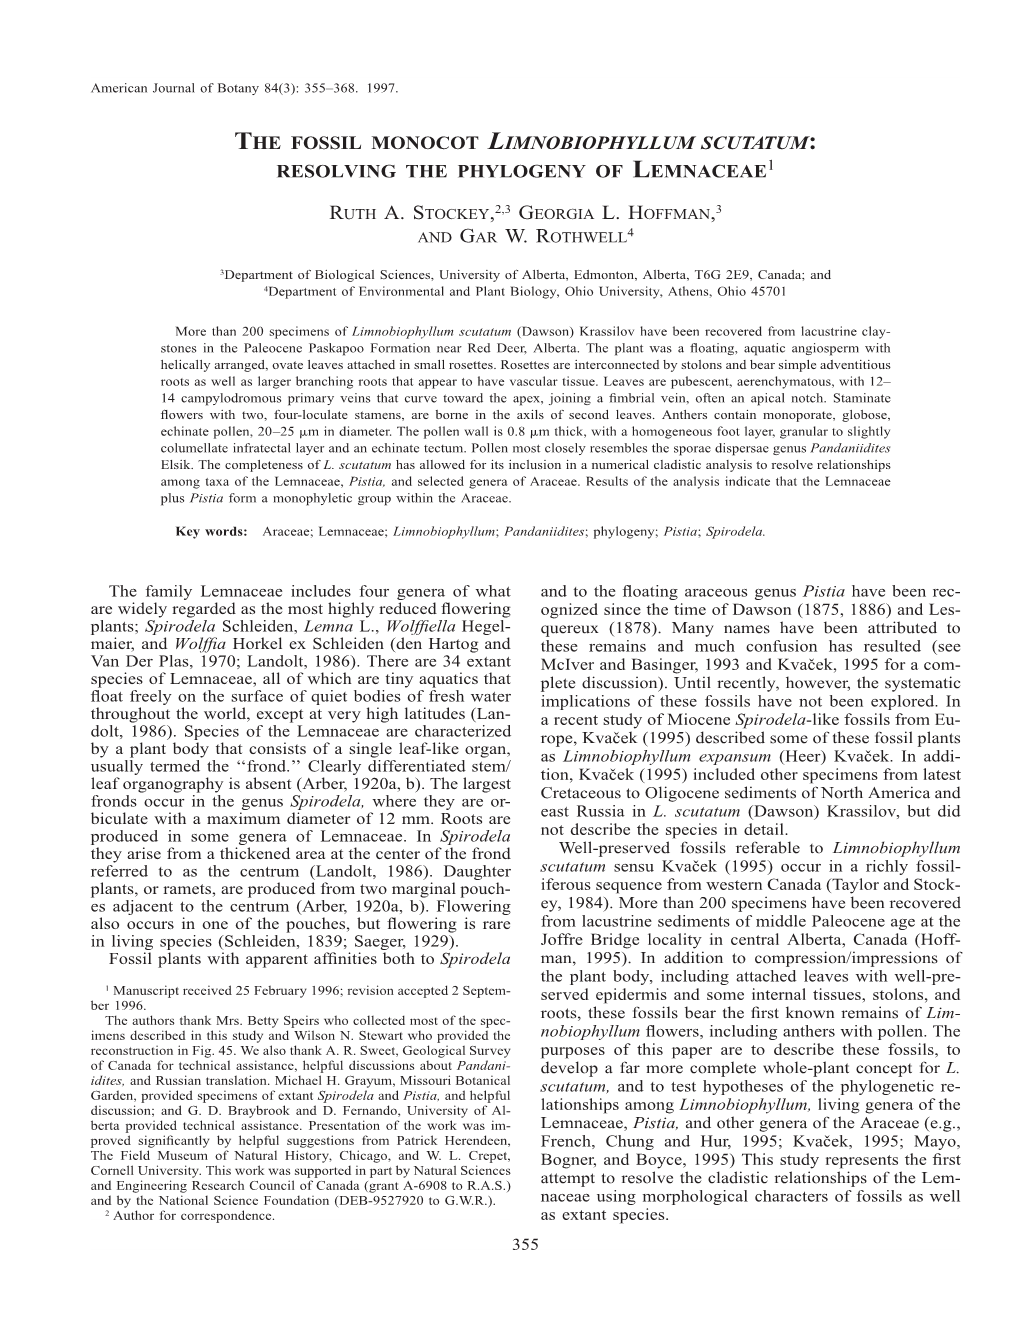 The Fossil Monocot Limnobiophyllum Scutatum: Resolving the Phylogeny of Lemnaceae1